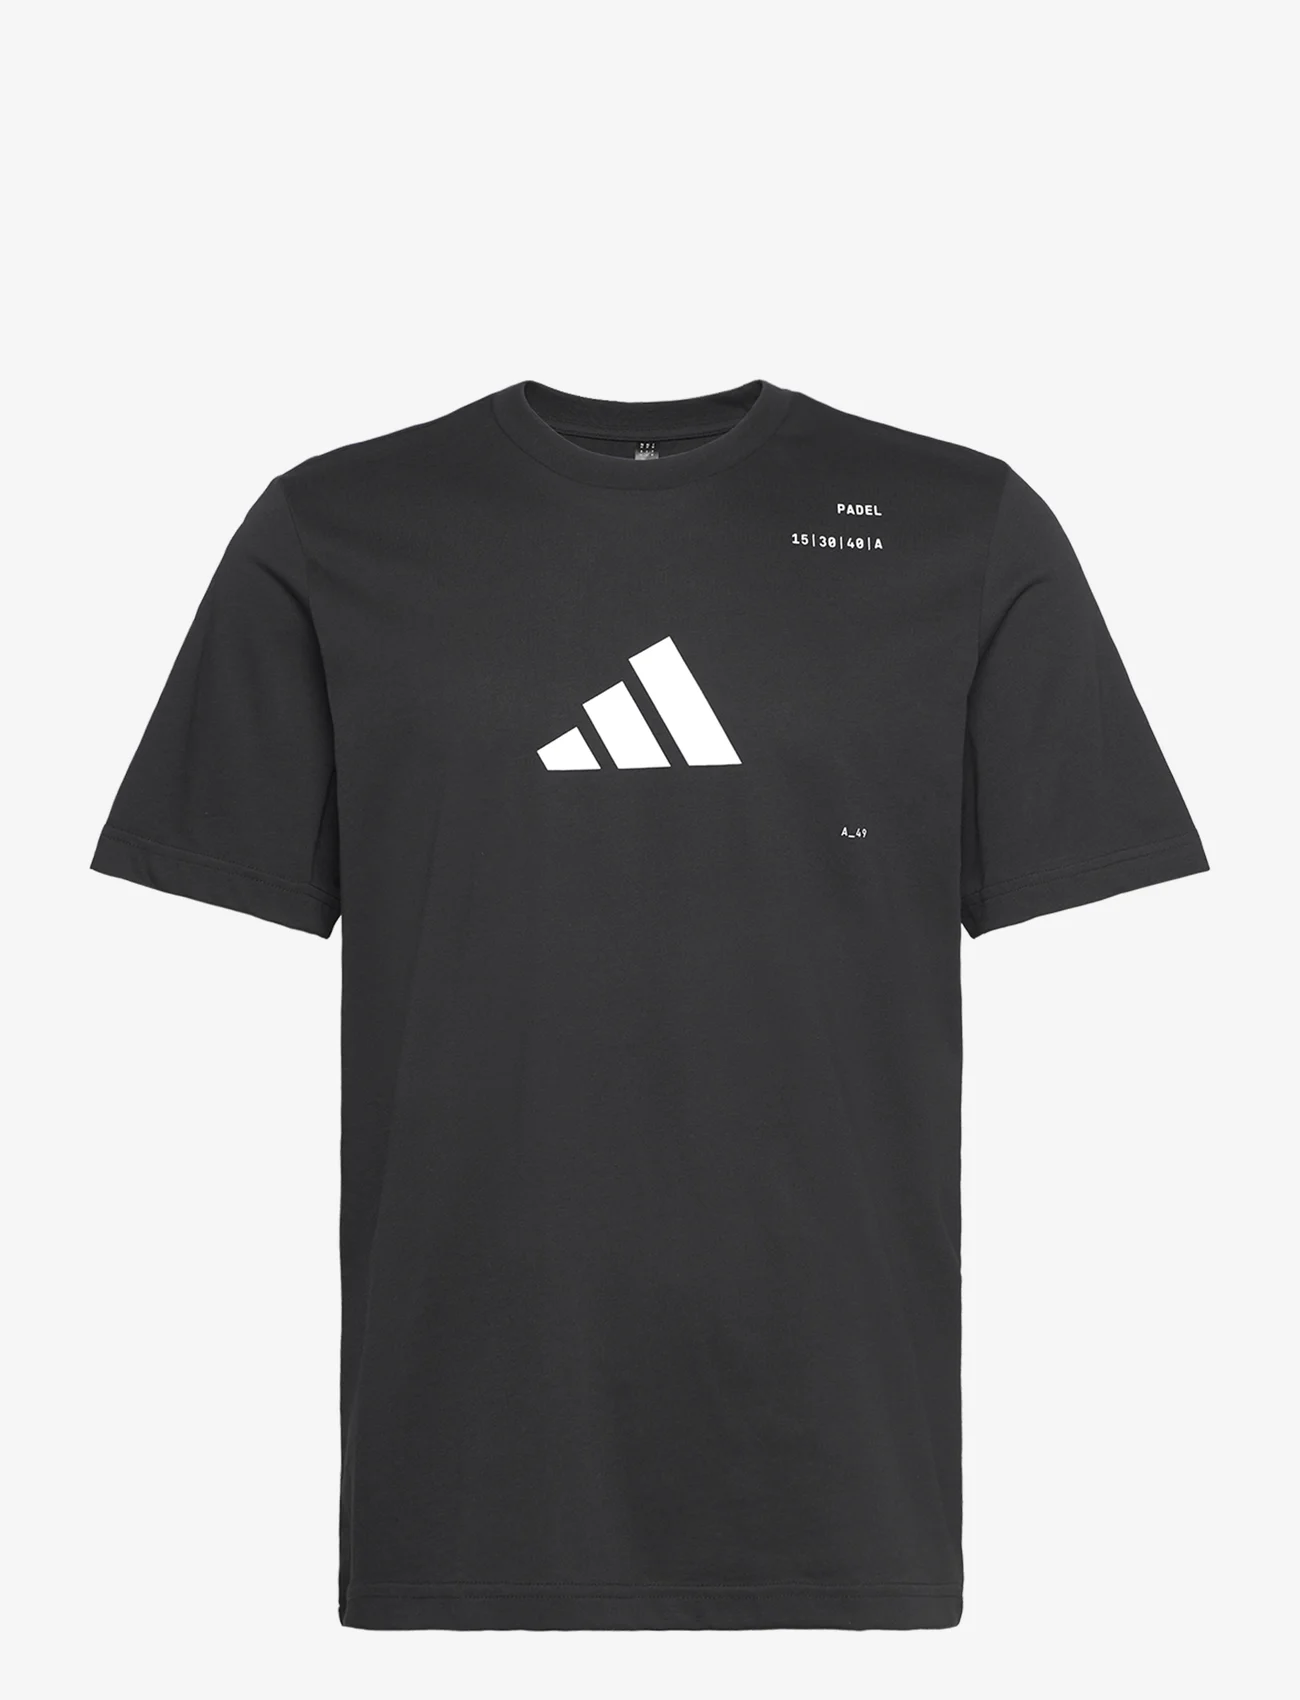 adidas Performance - PADEL GRAPHIC TEE - t-shirts - 000/black - 0